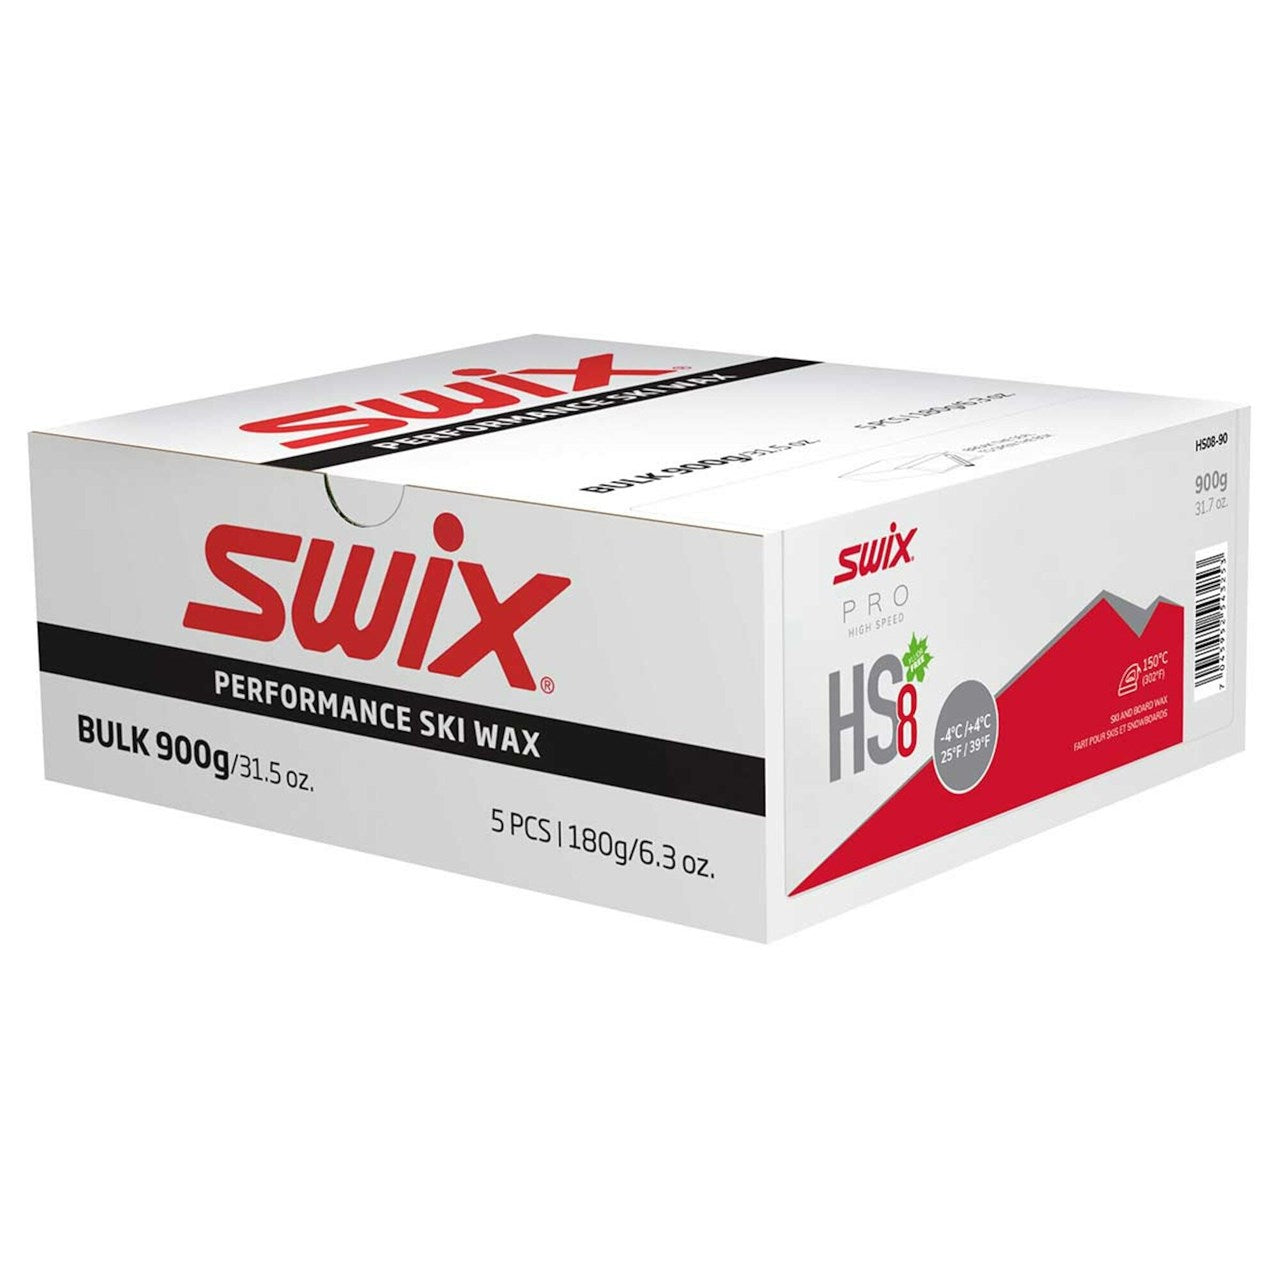 Swix HS8 Glide Wax 900g Bulk